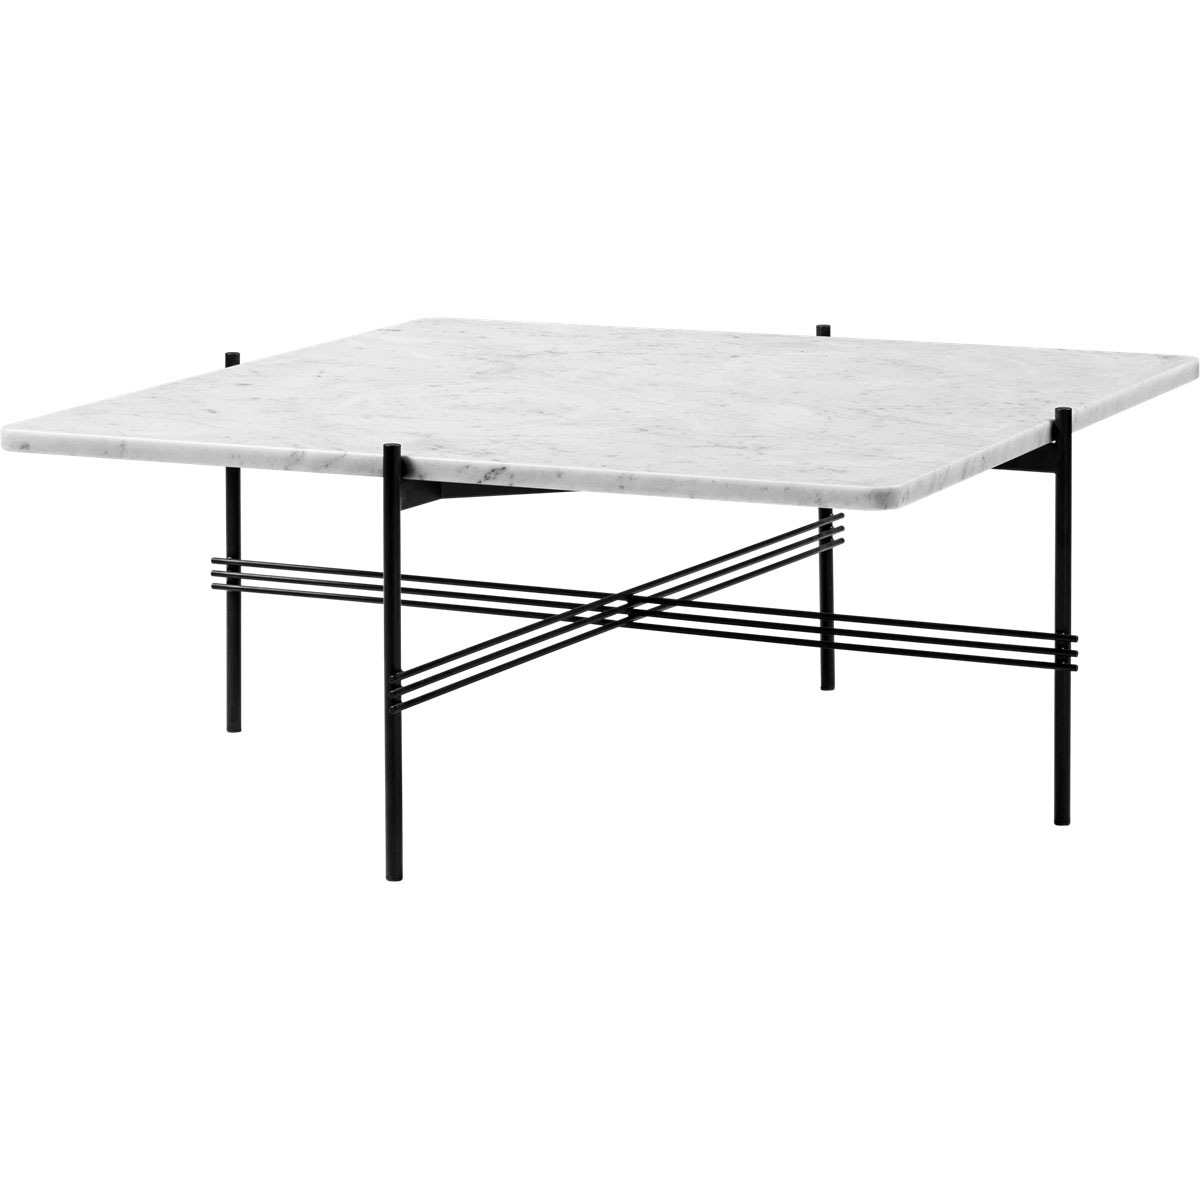 TS 80x80 Coffee Table, Black / White Marble